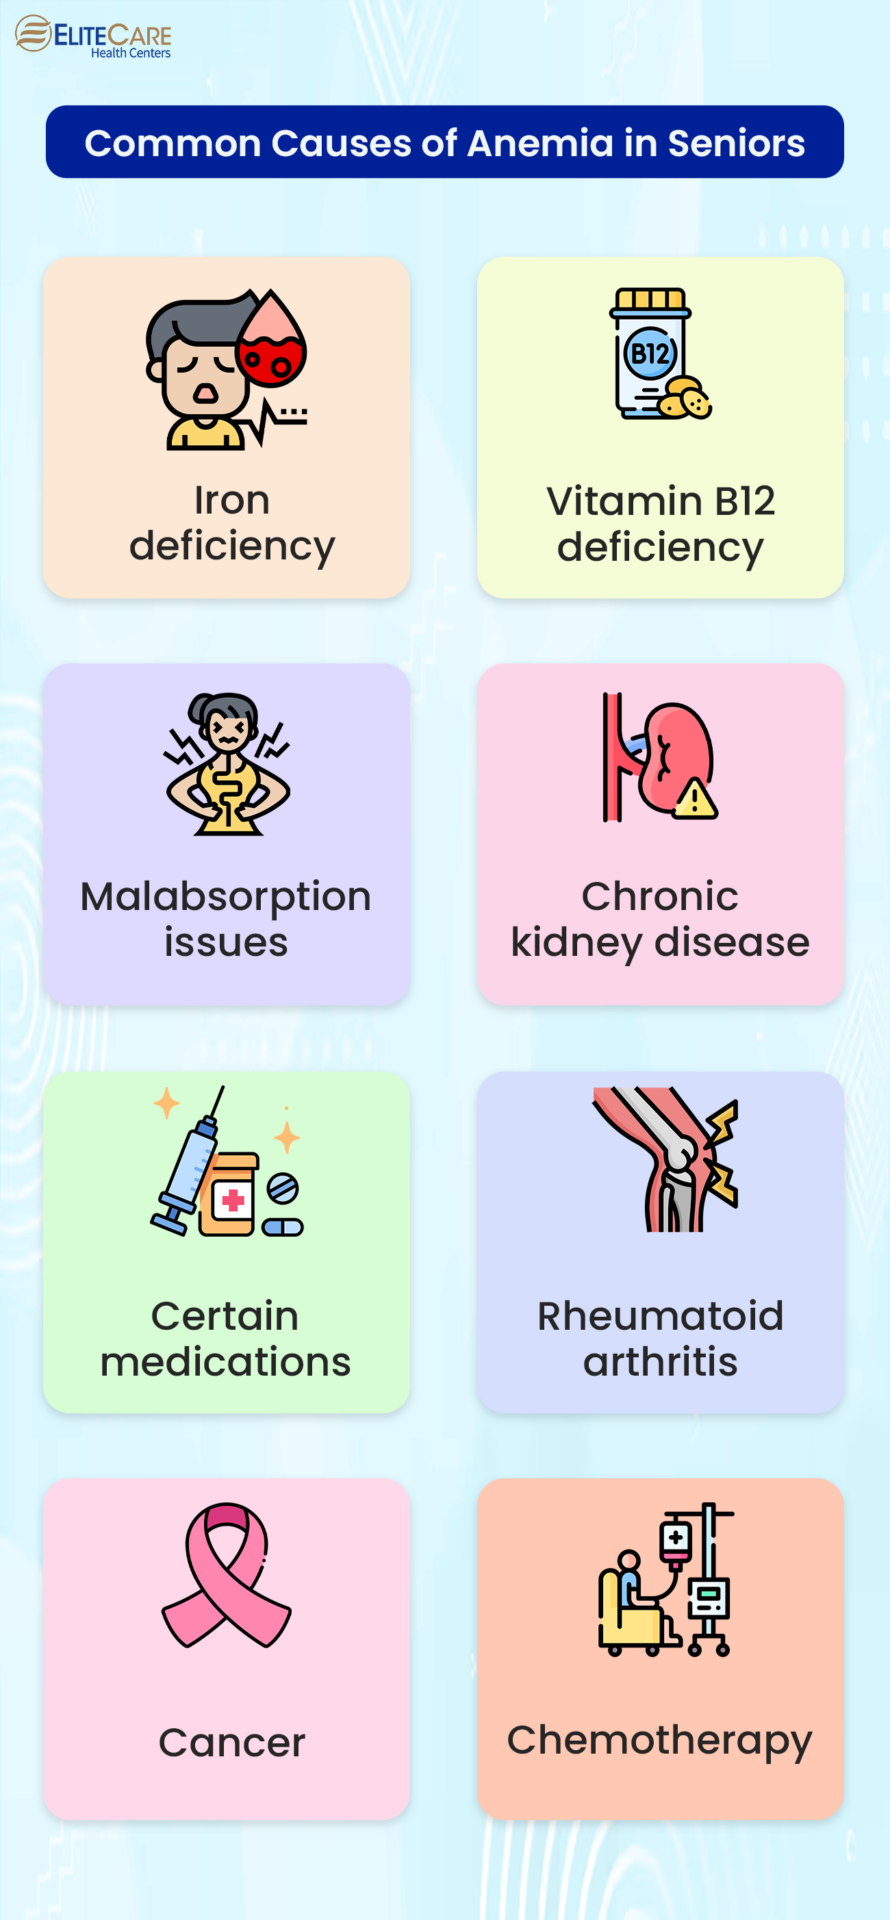 Common Causes of Anemia in Seniors